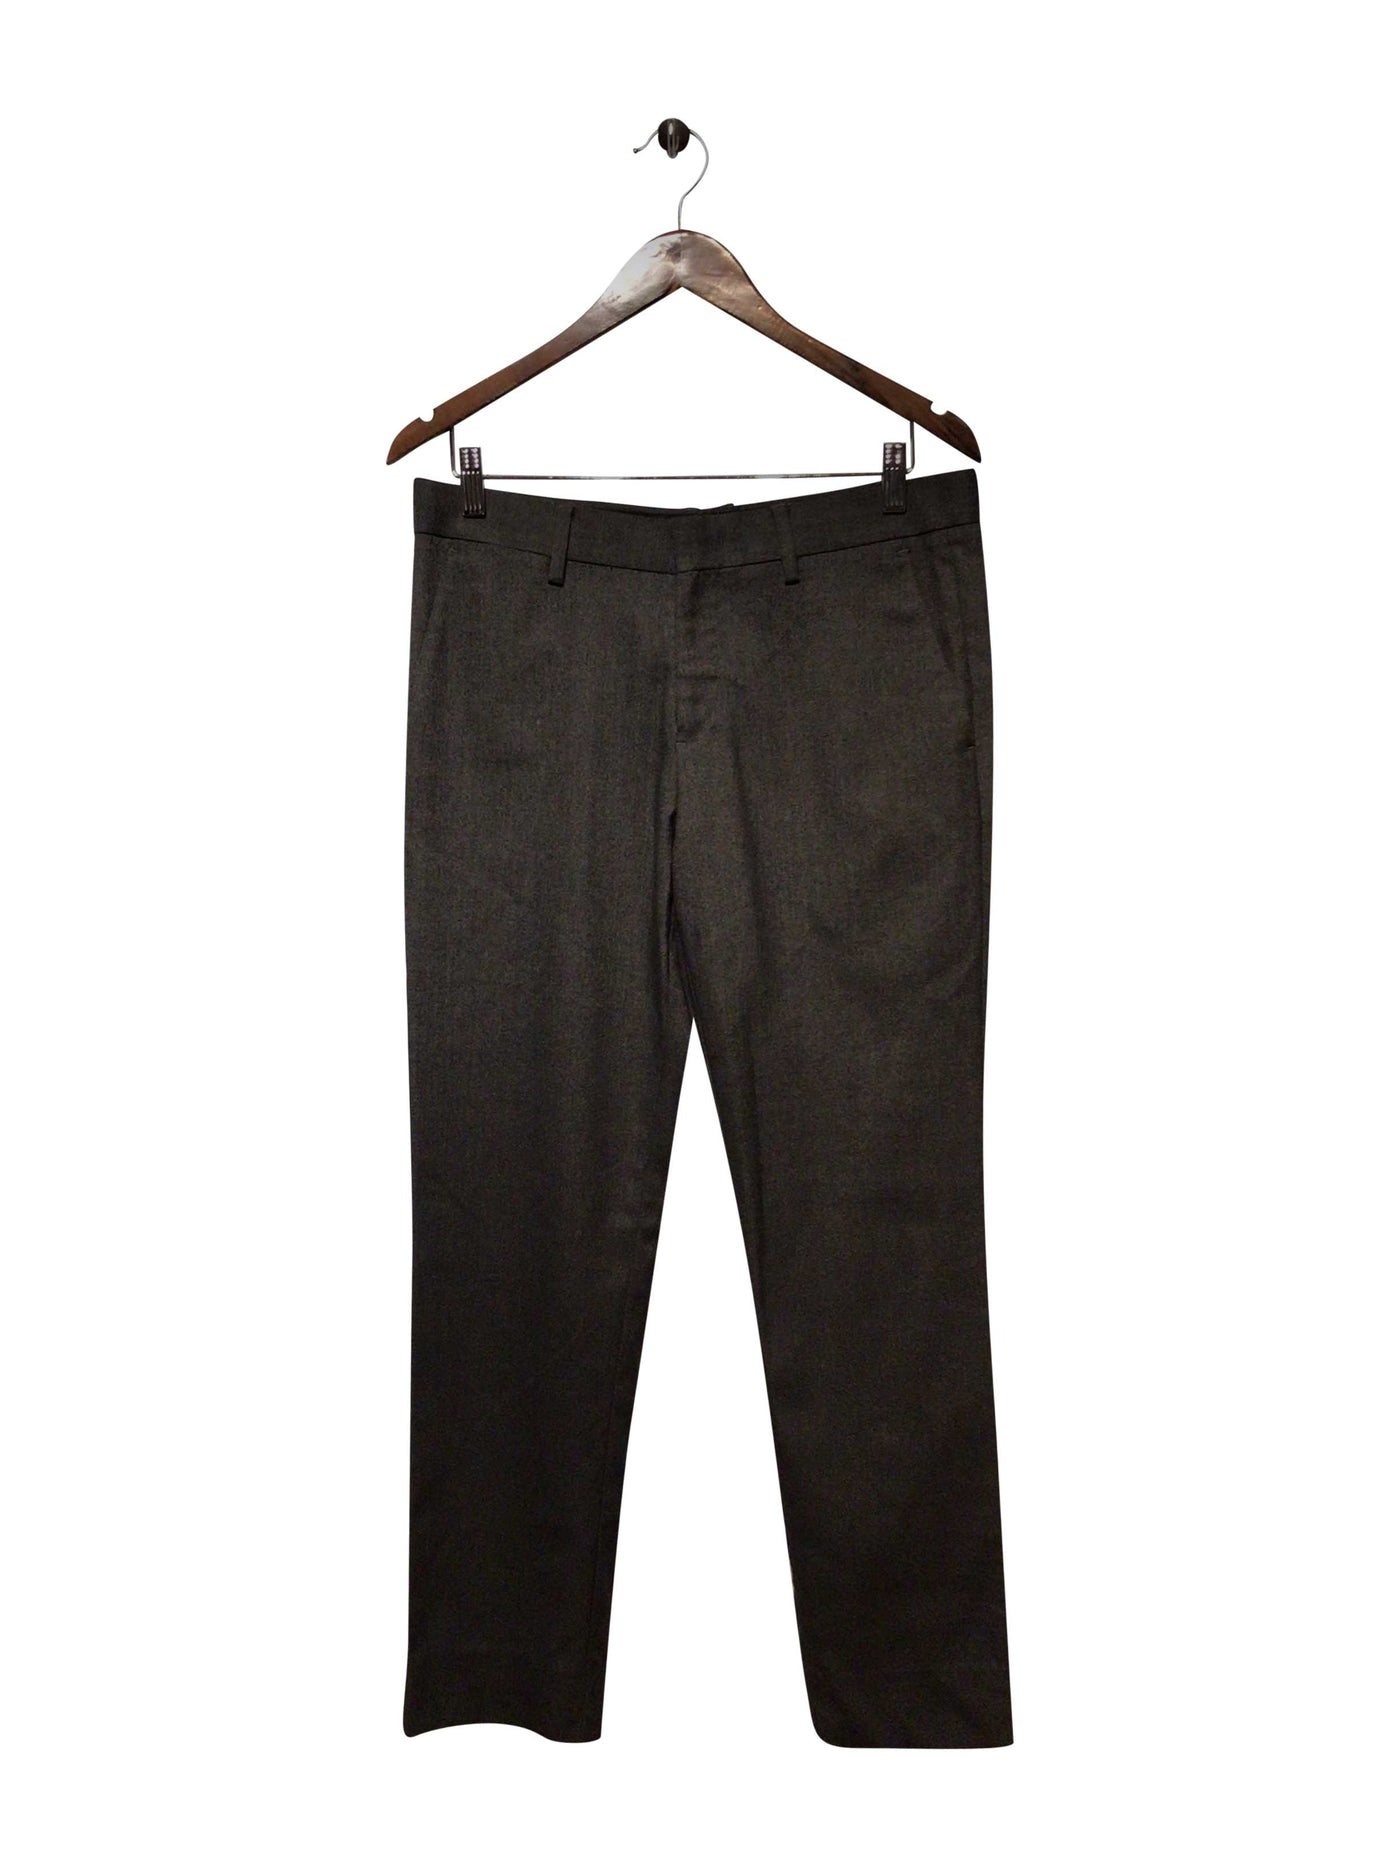 RW & Co. Regular fit Pant in Gray  -  30x32  15.00 Koop